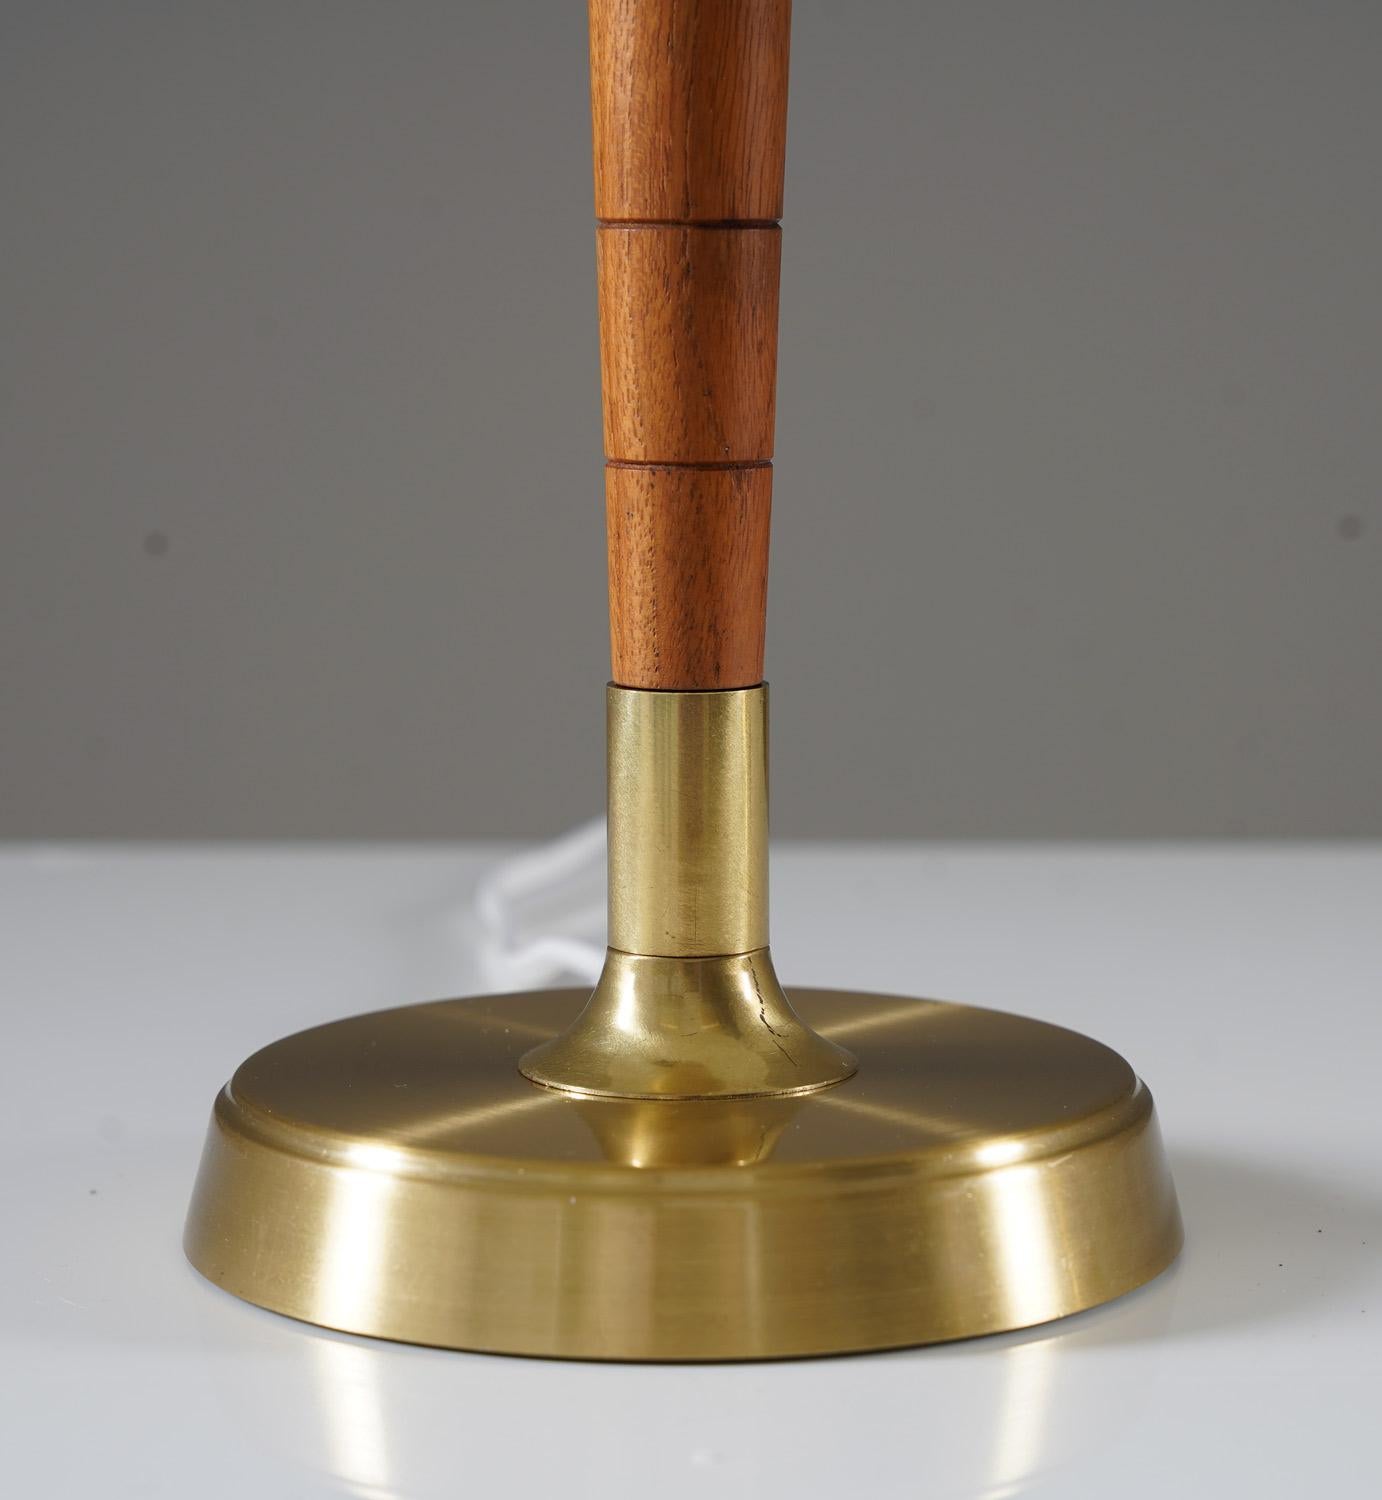 Scandinavian Midcentury Table Lamp in Brass and Teak by Falkenbergs 1